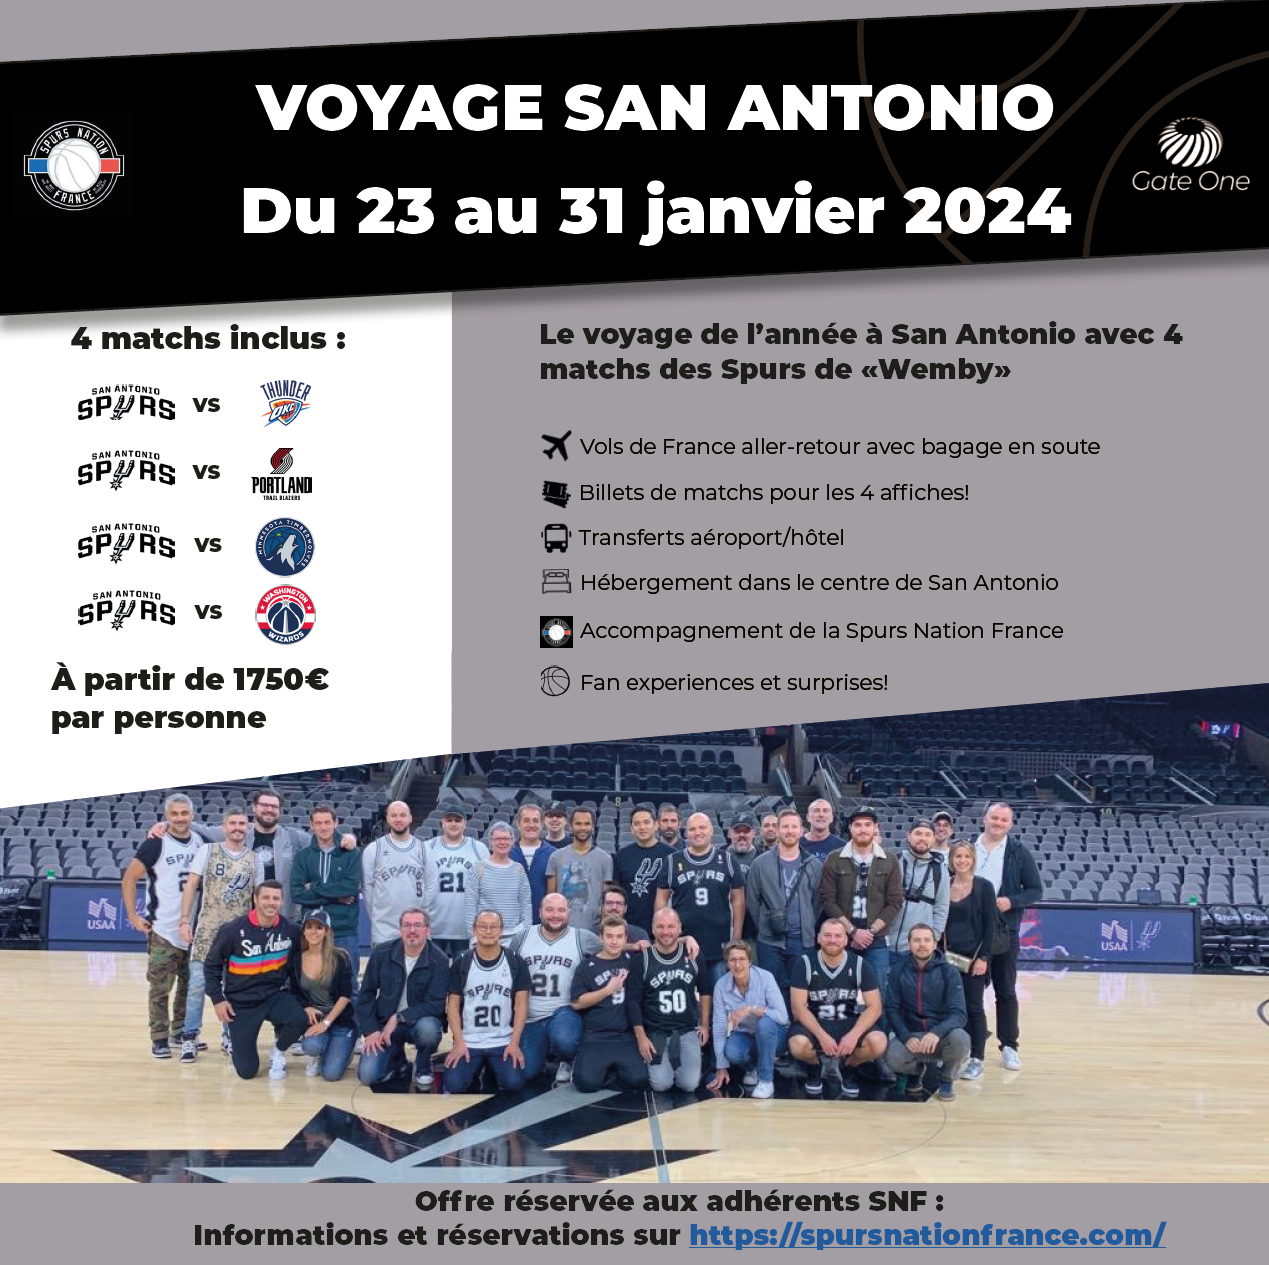 Voyage Spurs Nation France X Gate One Voyages